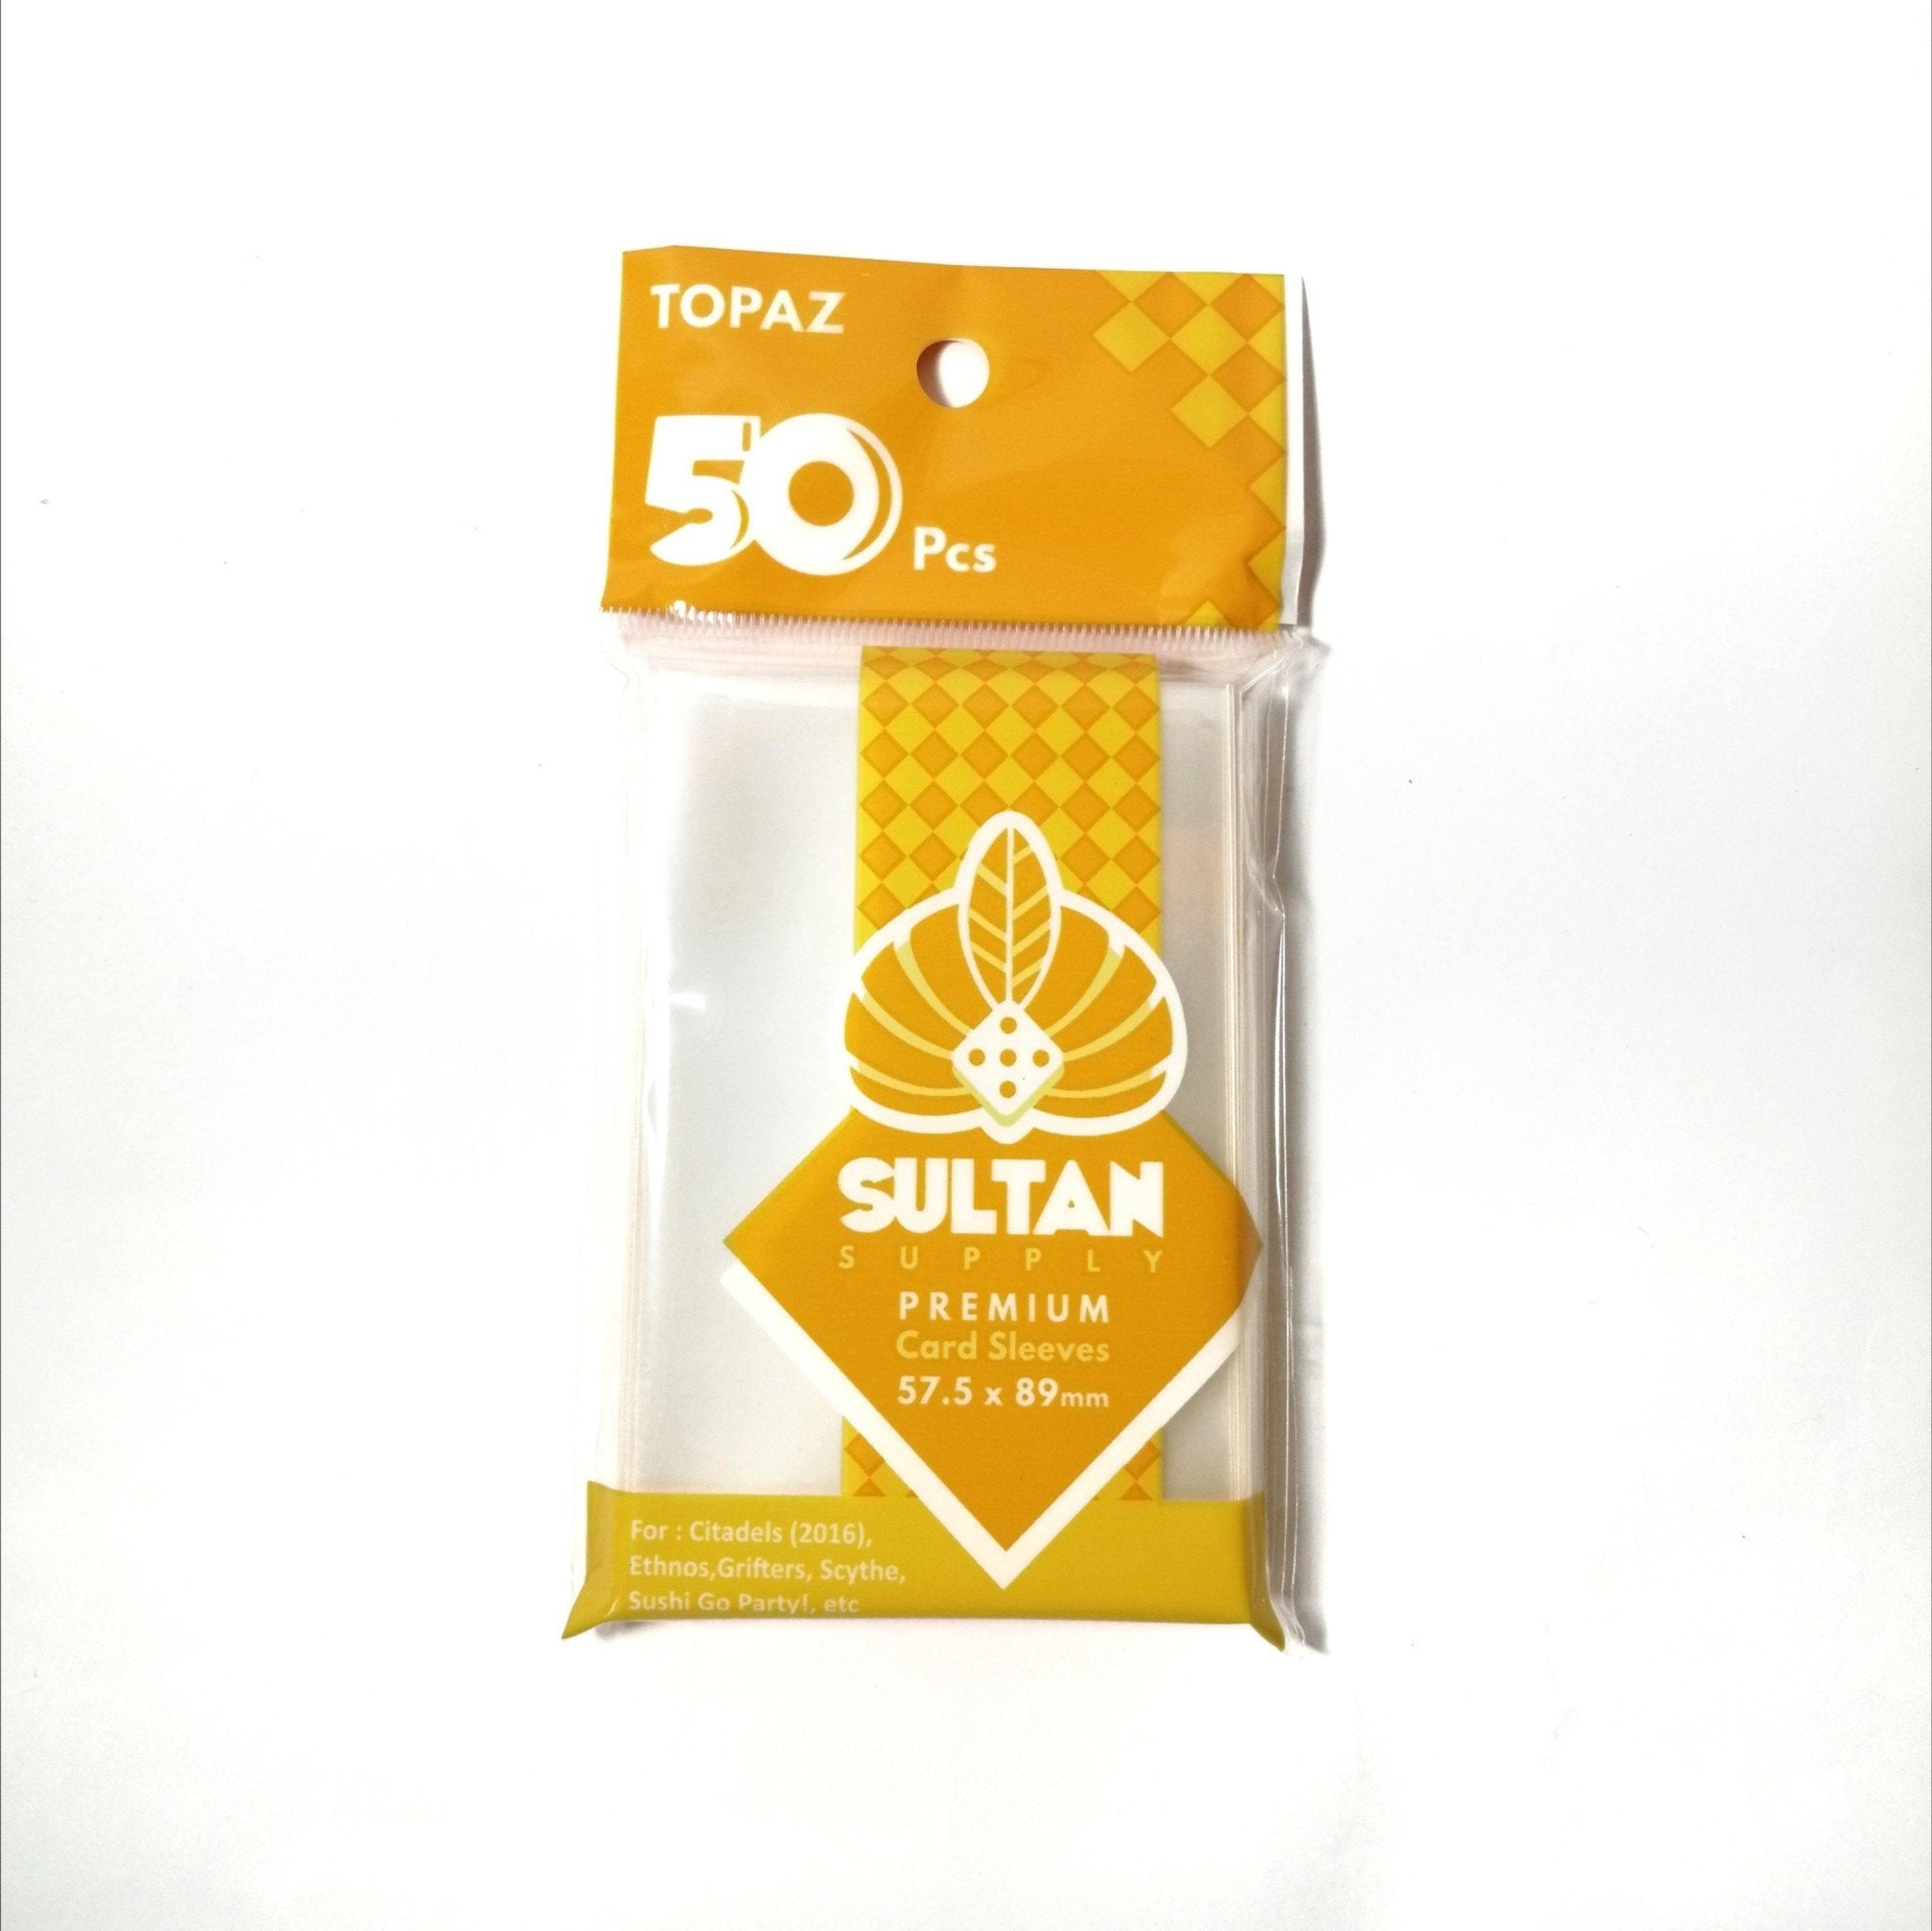 Sultan Supply Premium Card Sleeves: 65 x 100 mm Zircon (90 microns)